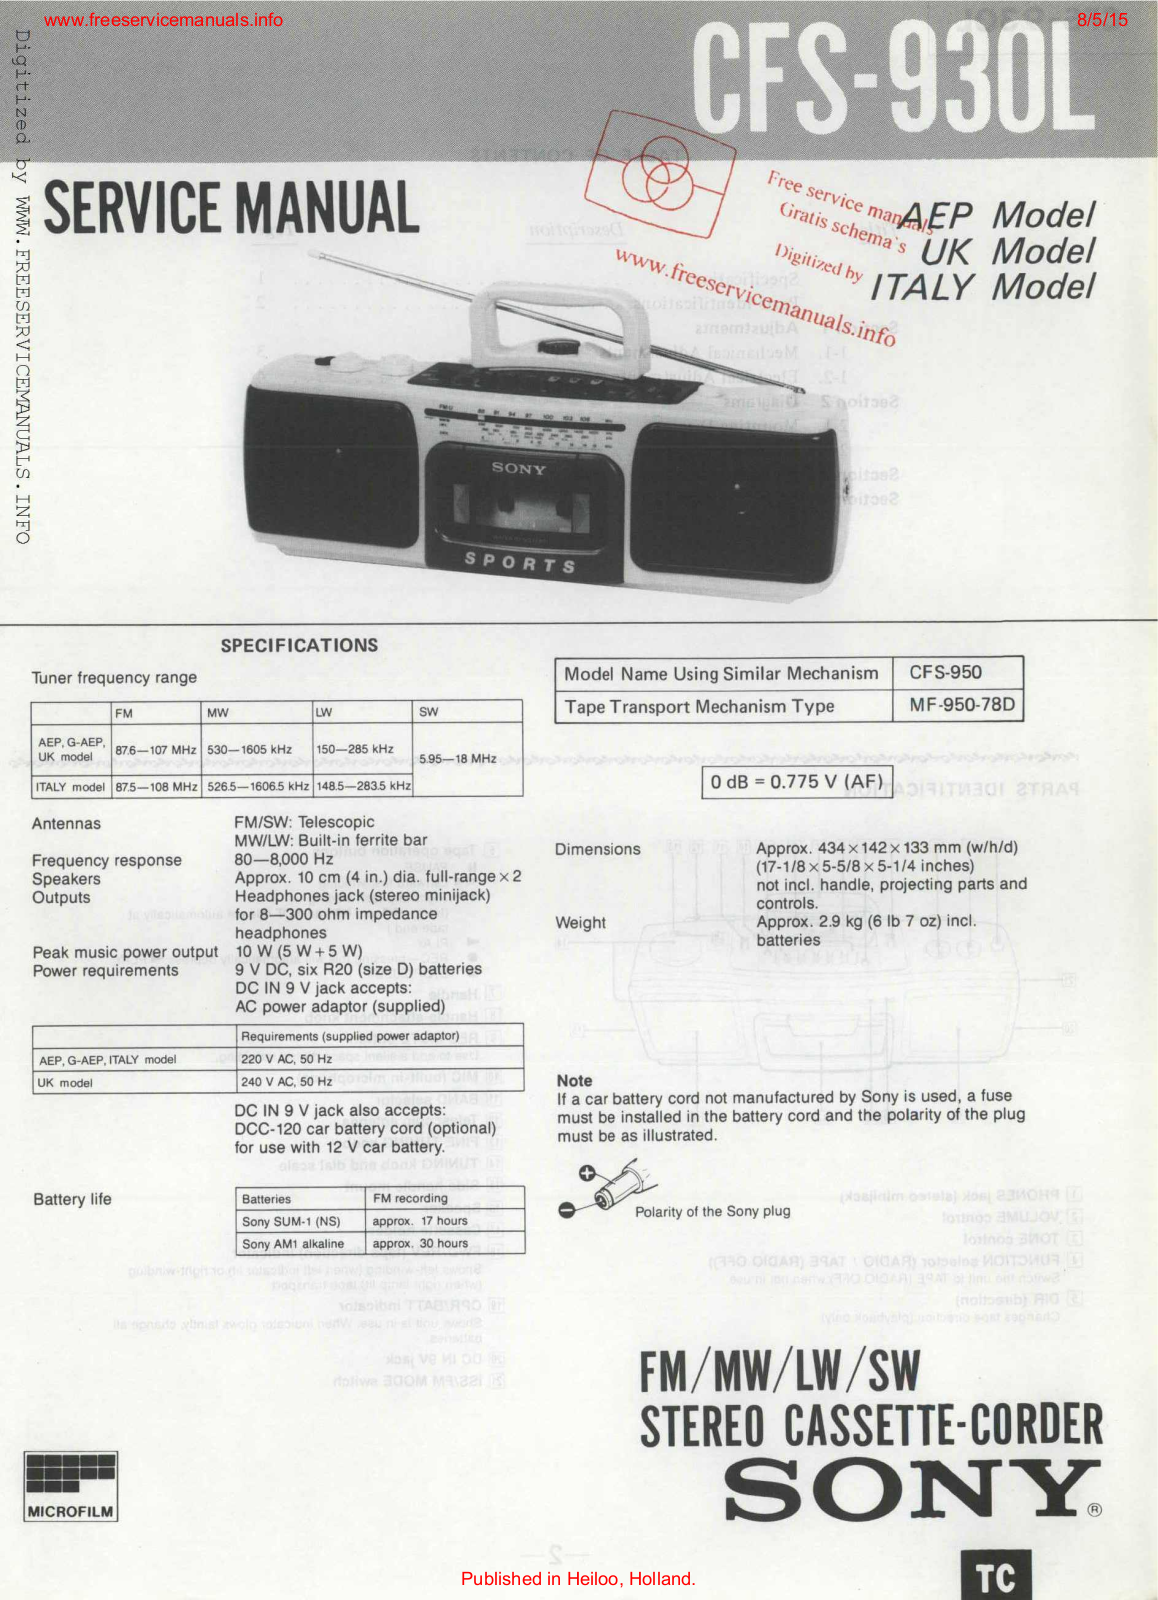 Sony CFS-930L Service Manual